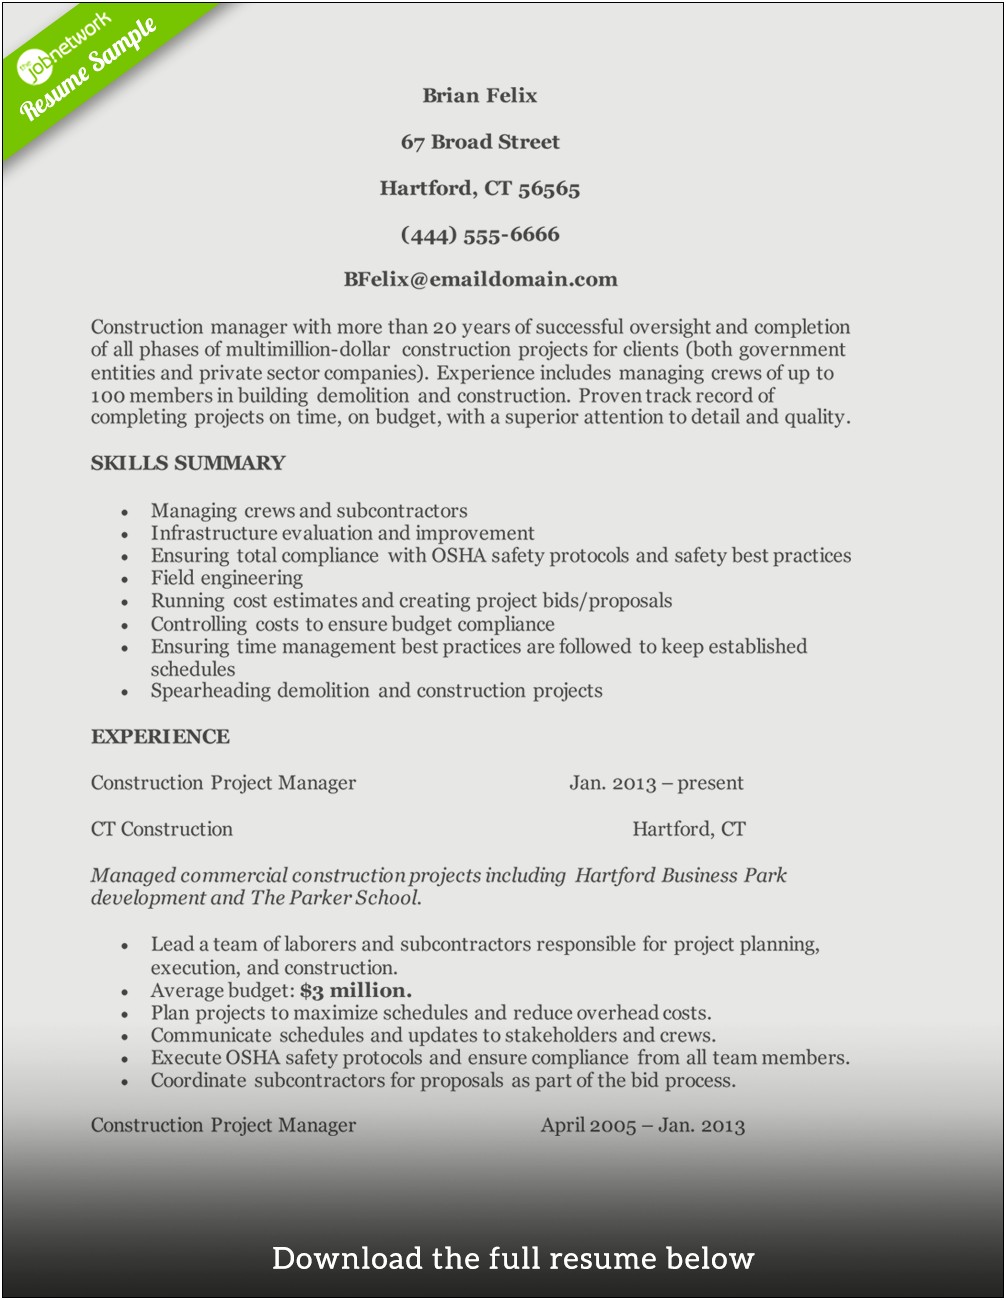 Construction Job Description Resume Sample